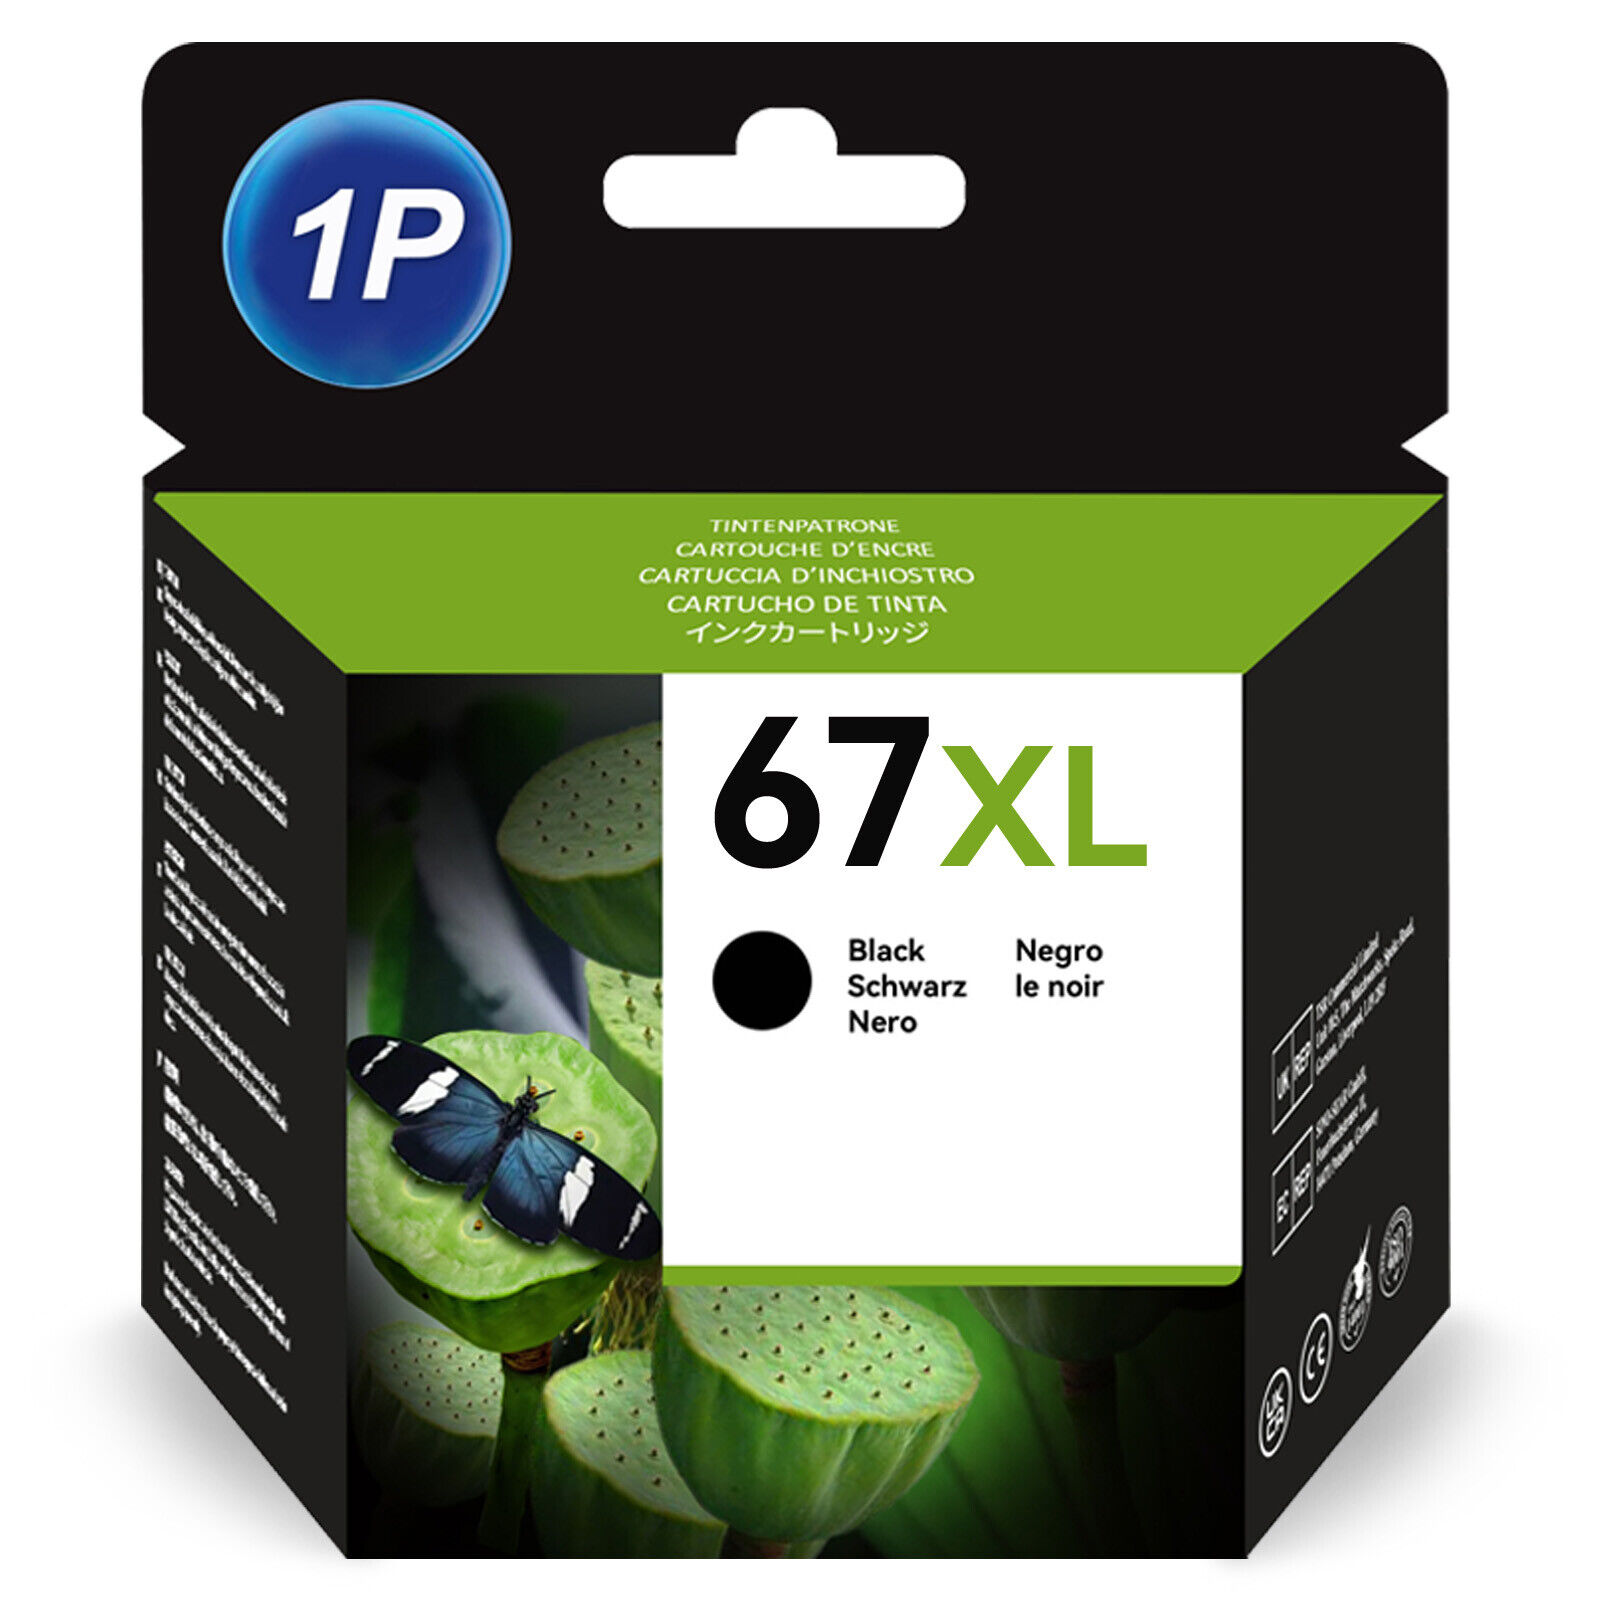 67XL Ink Cartridge for HP 67 XL Ink Deskjet 2755 4155 2700e Envy 6010 6055 6020e